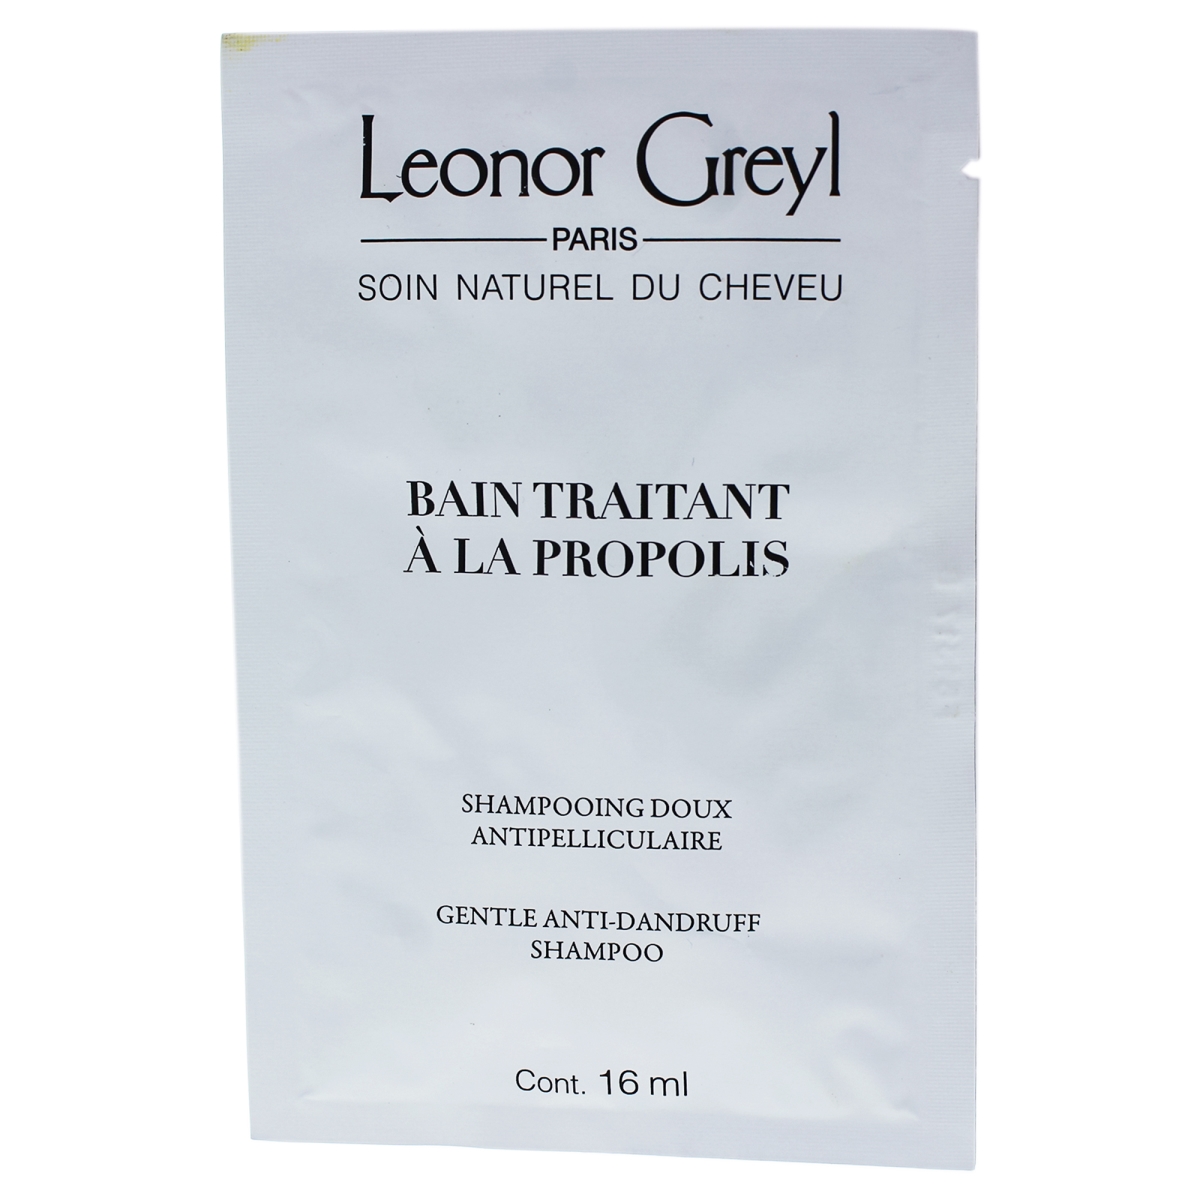 I0086602 Bain Traitant A La Propolis Shampoo For Unisex - 16 Ml